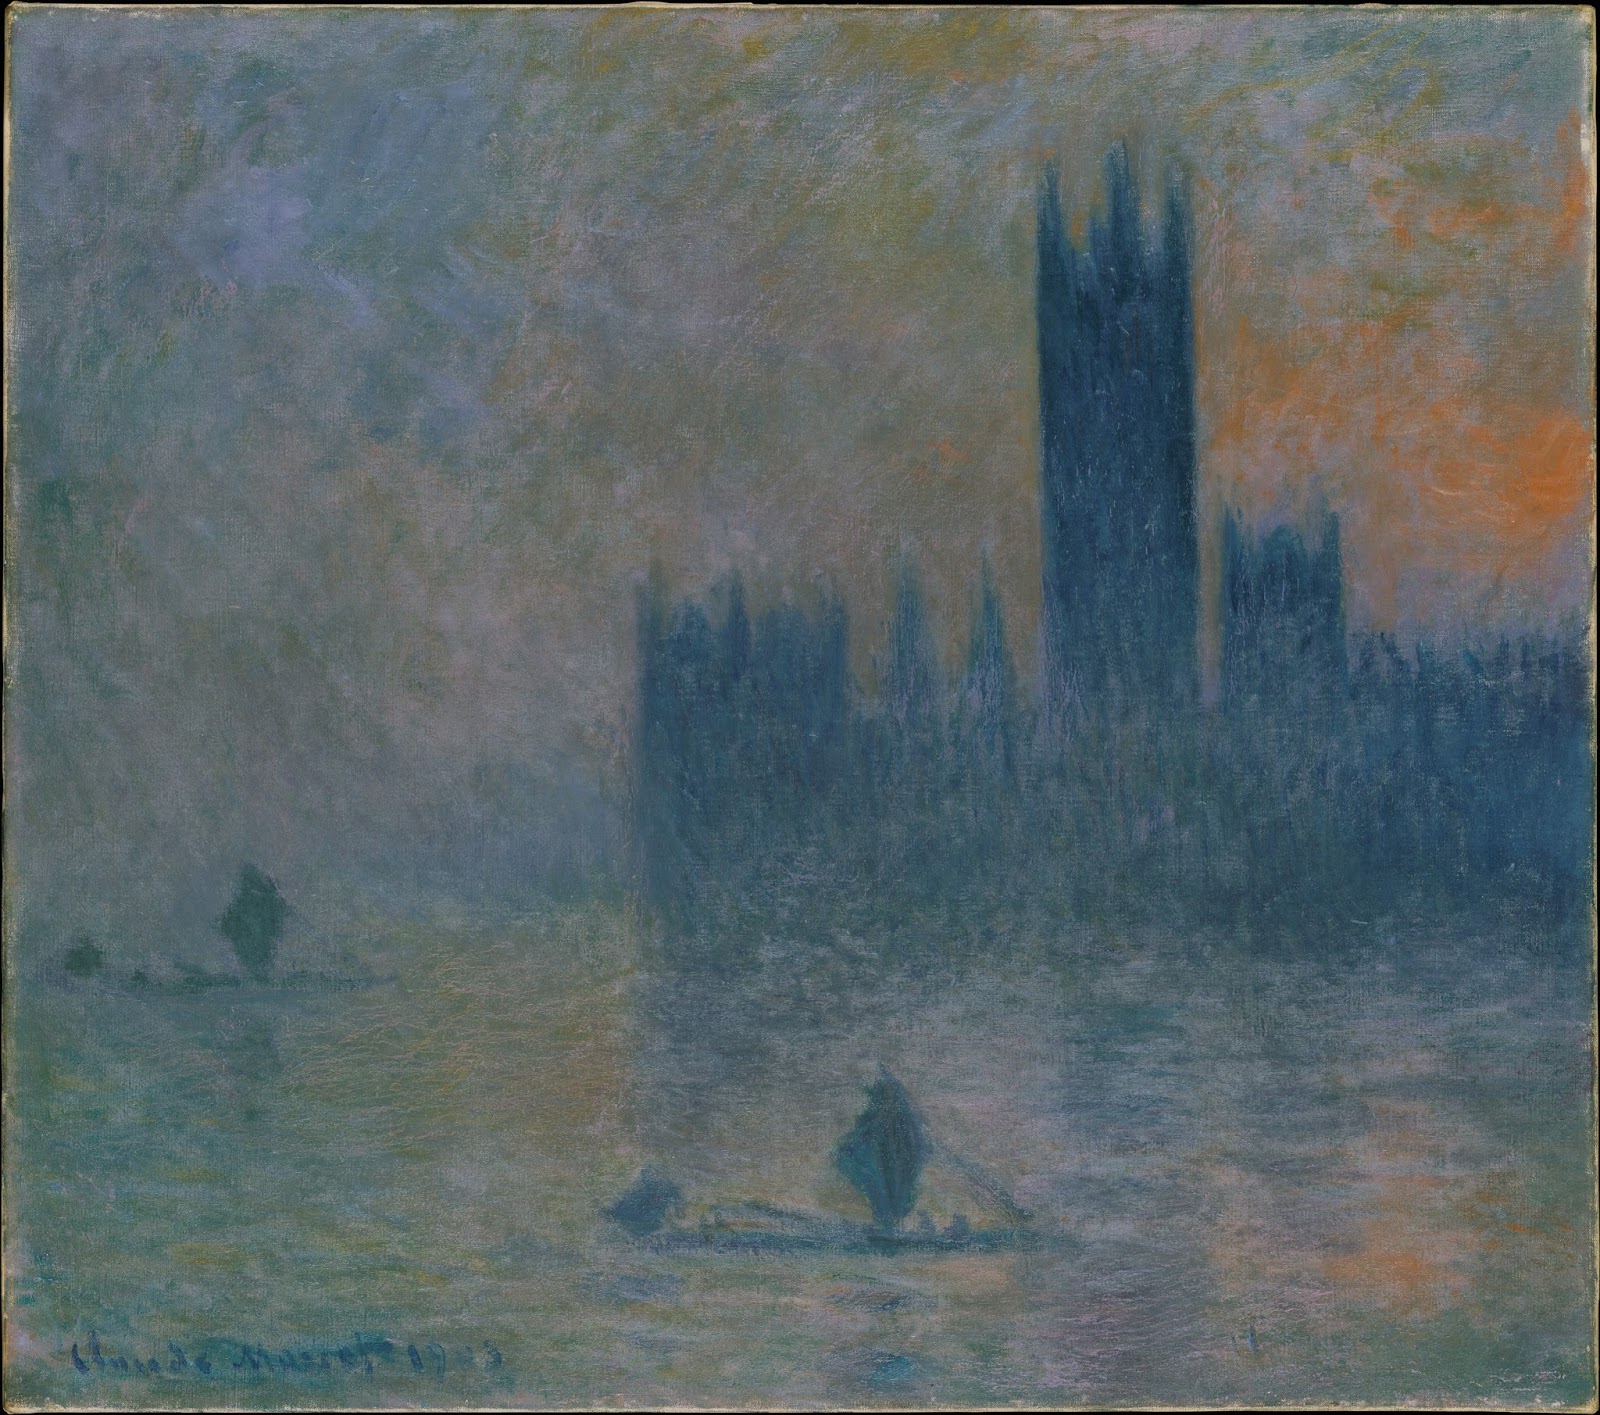 Claude+Monet-1840-1926 (760).jpg